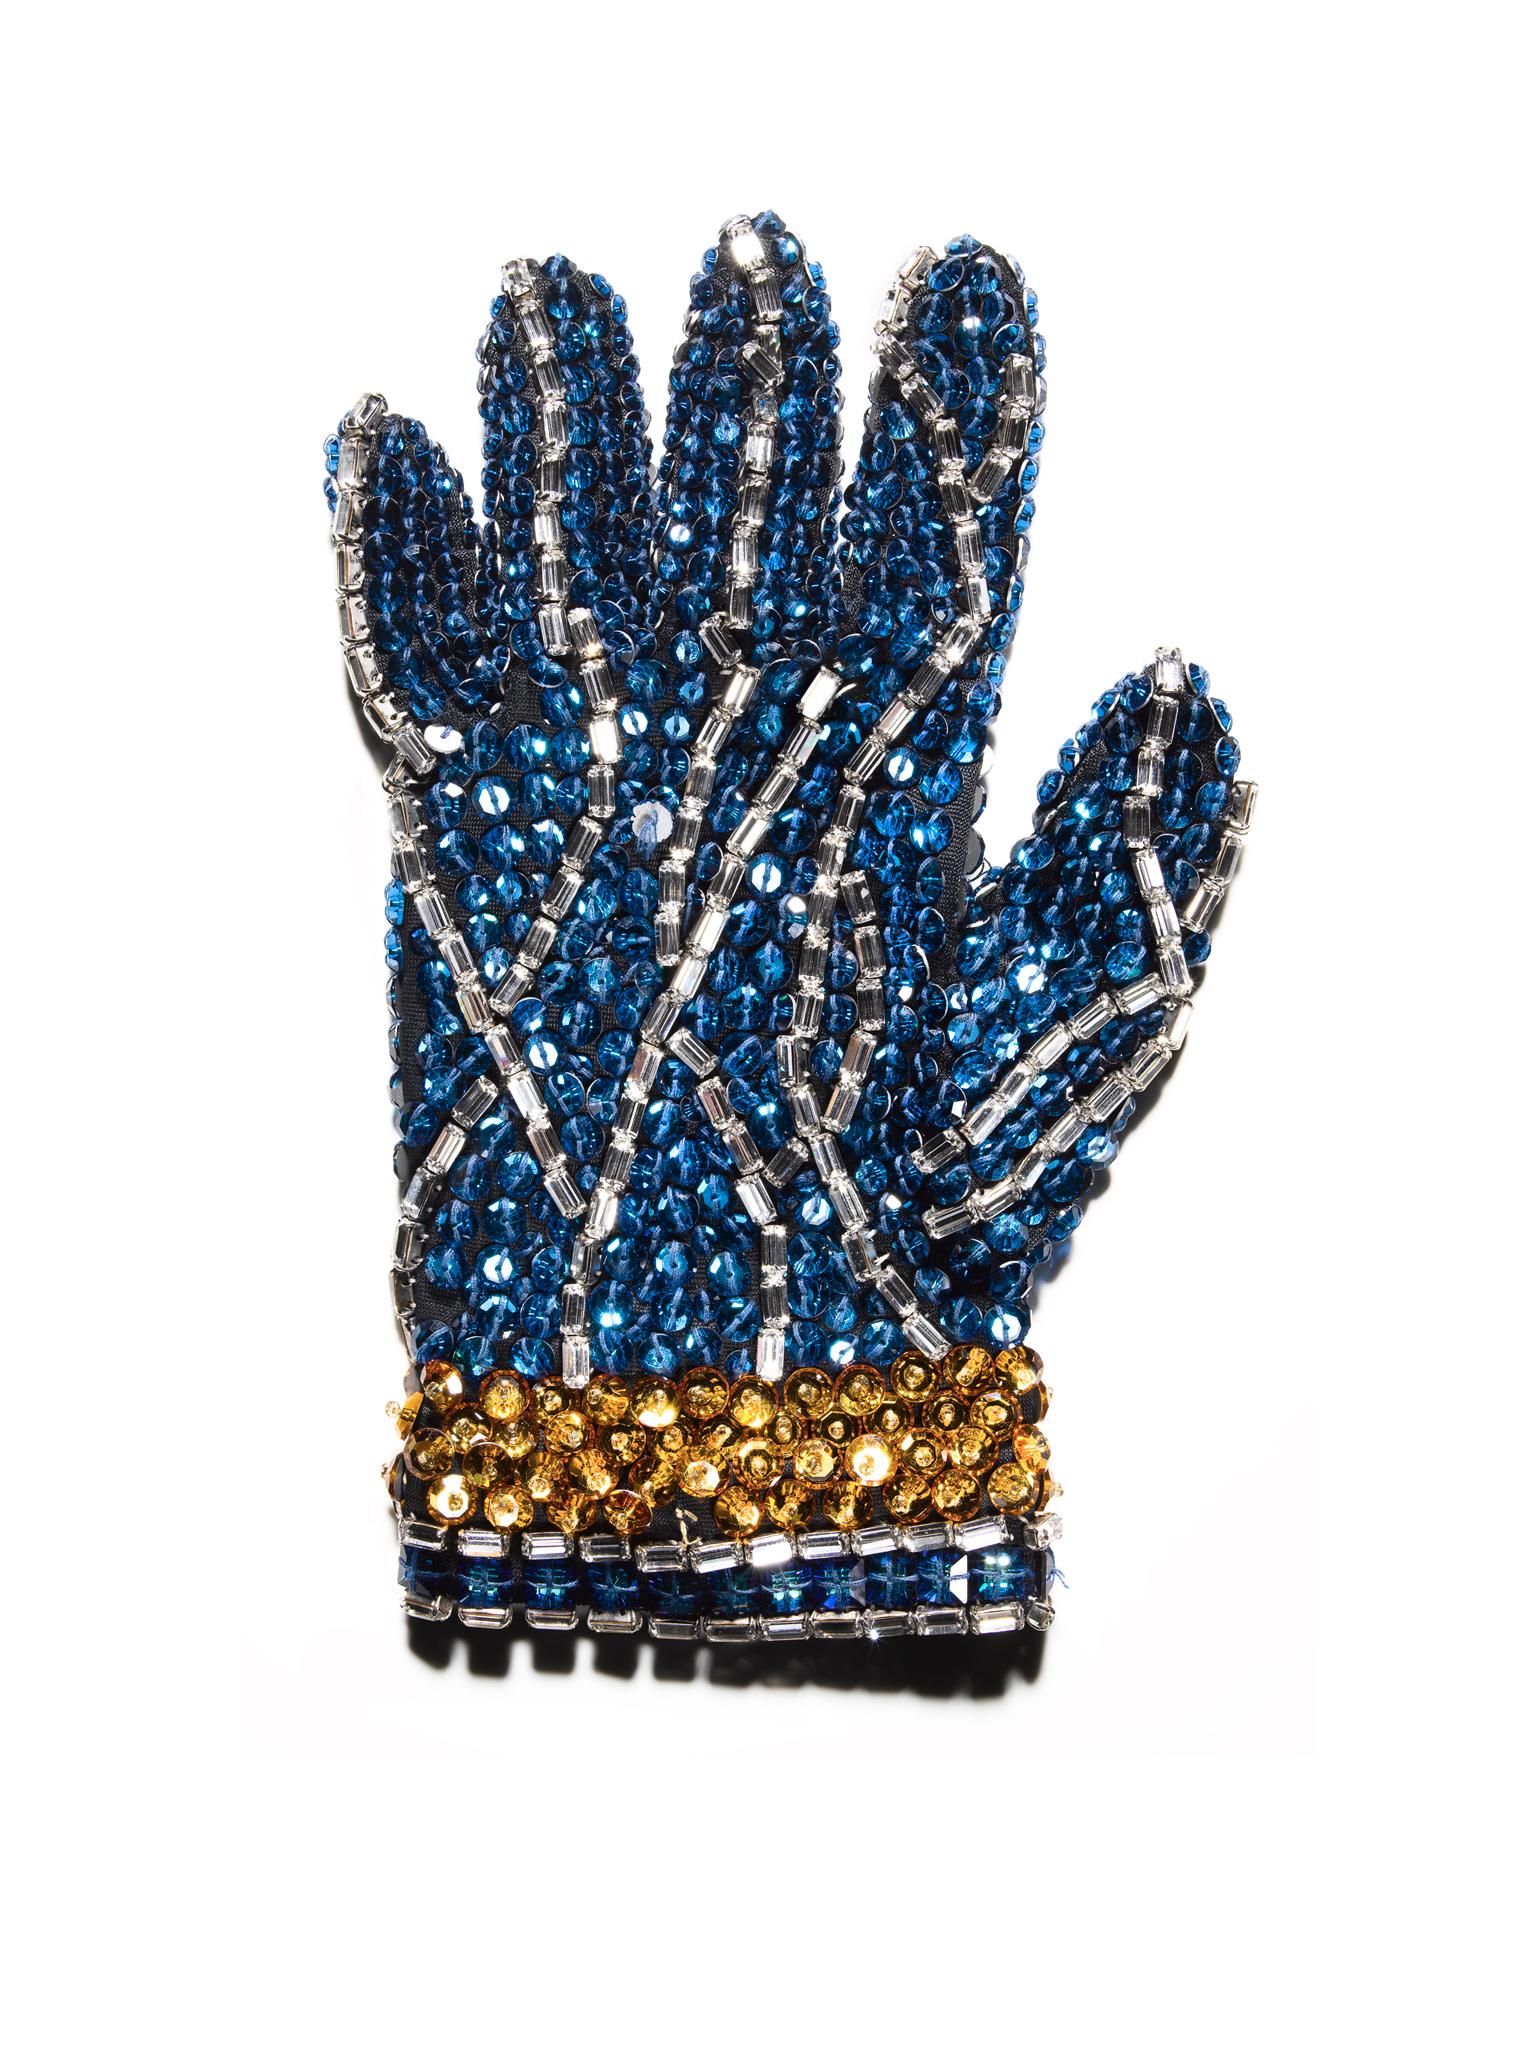 Blue Glove ( Michael Jackson ) 40" x 30"